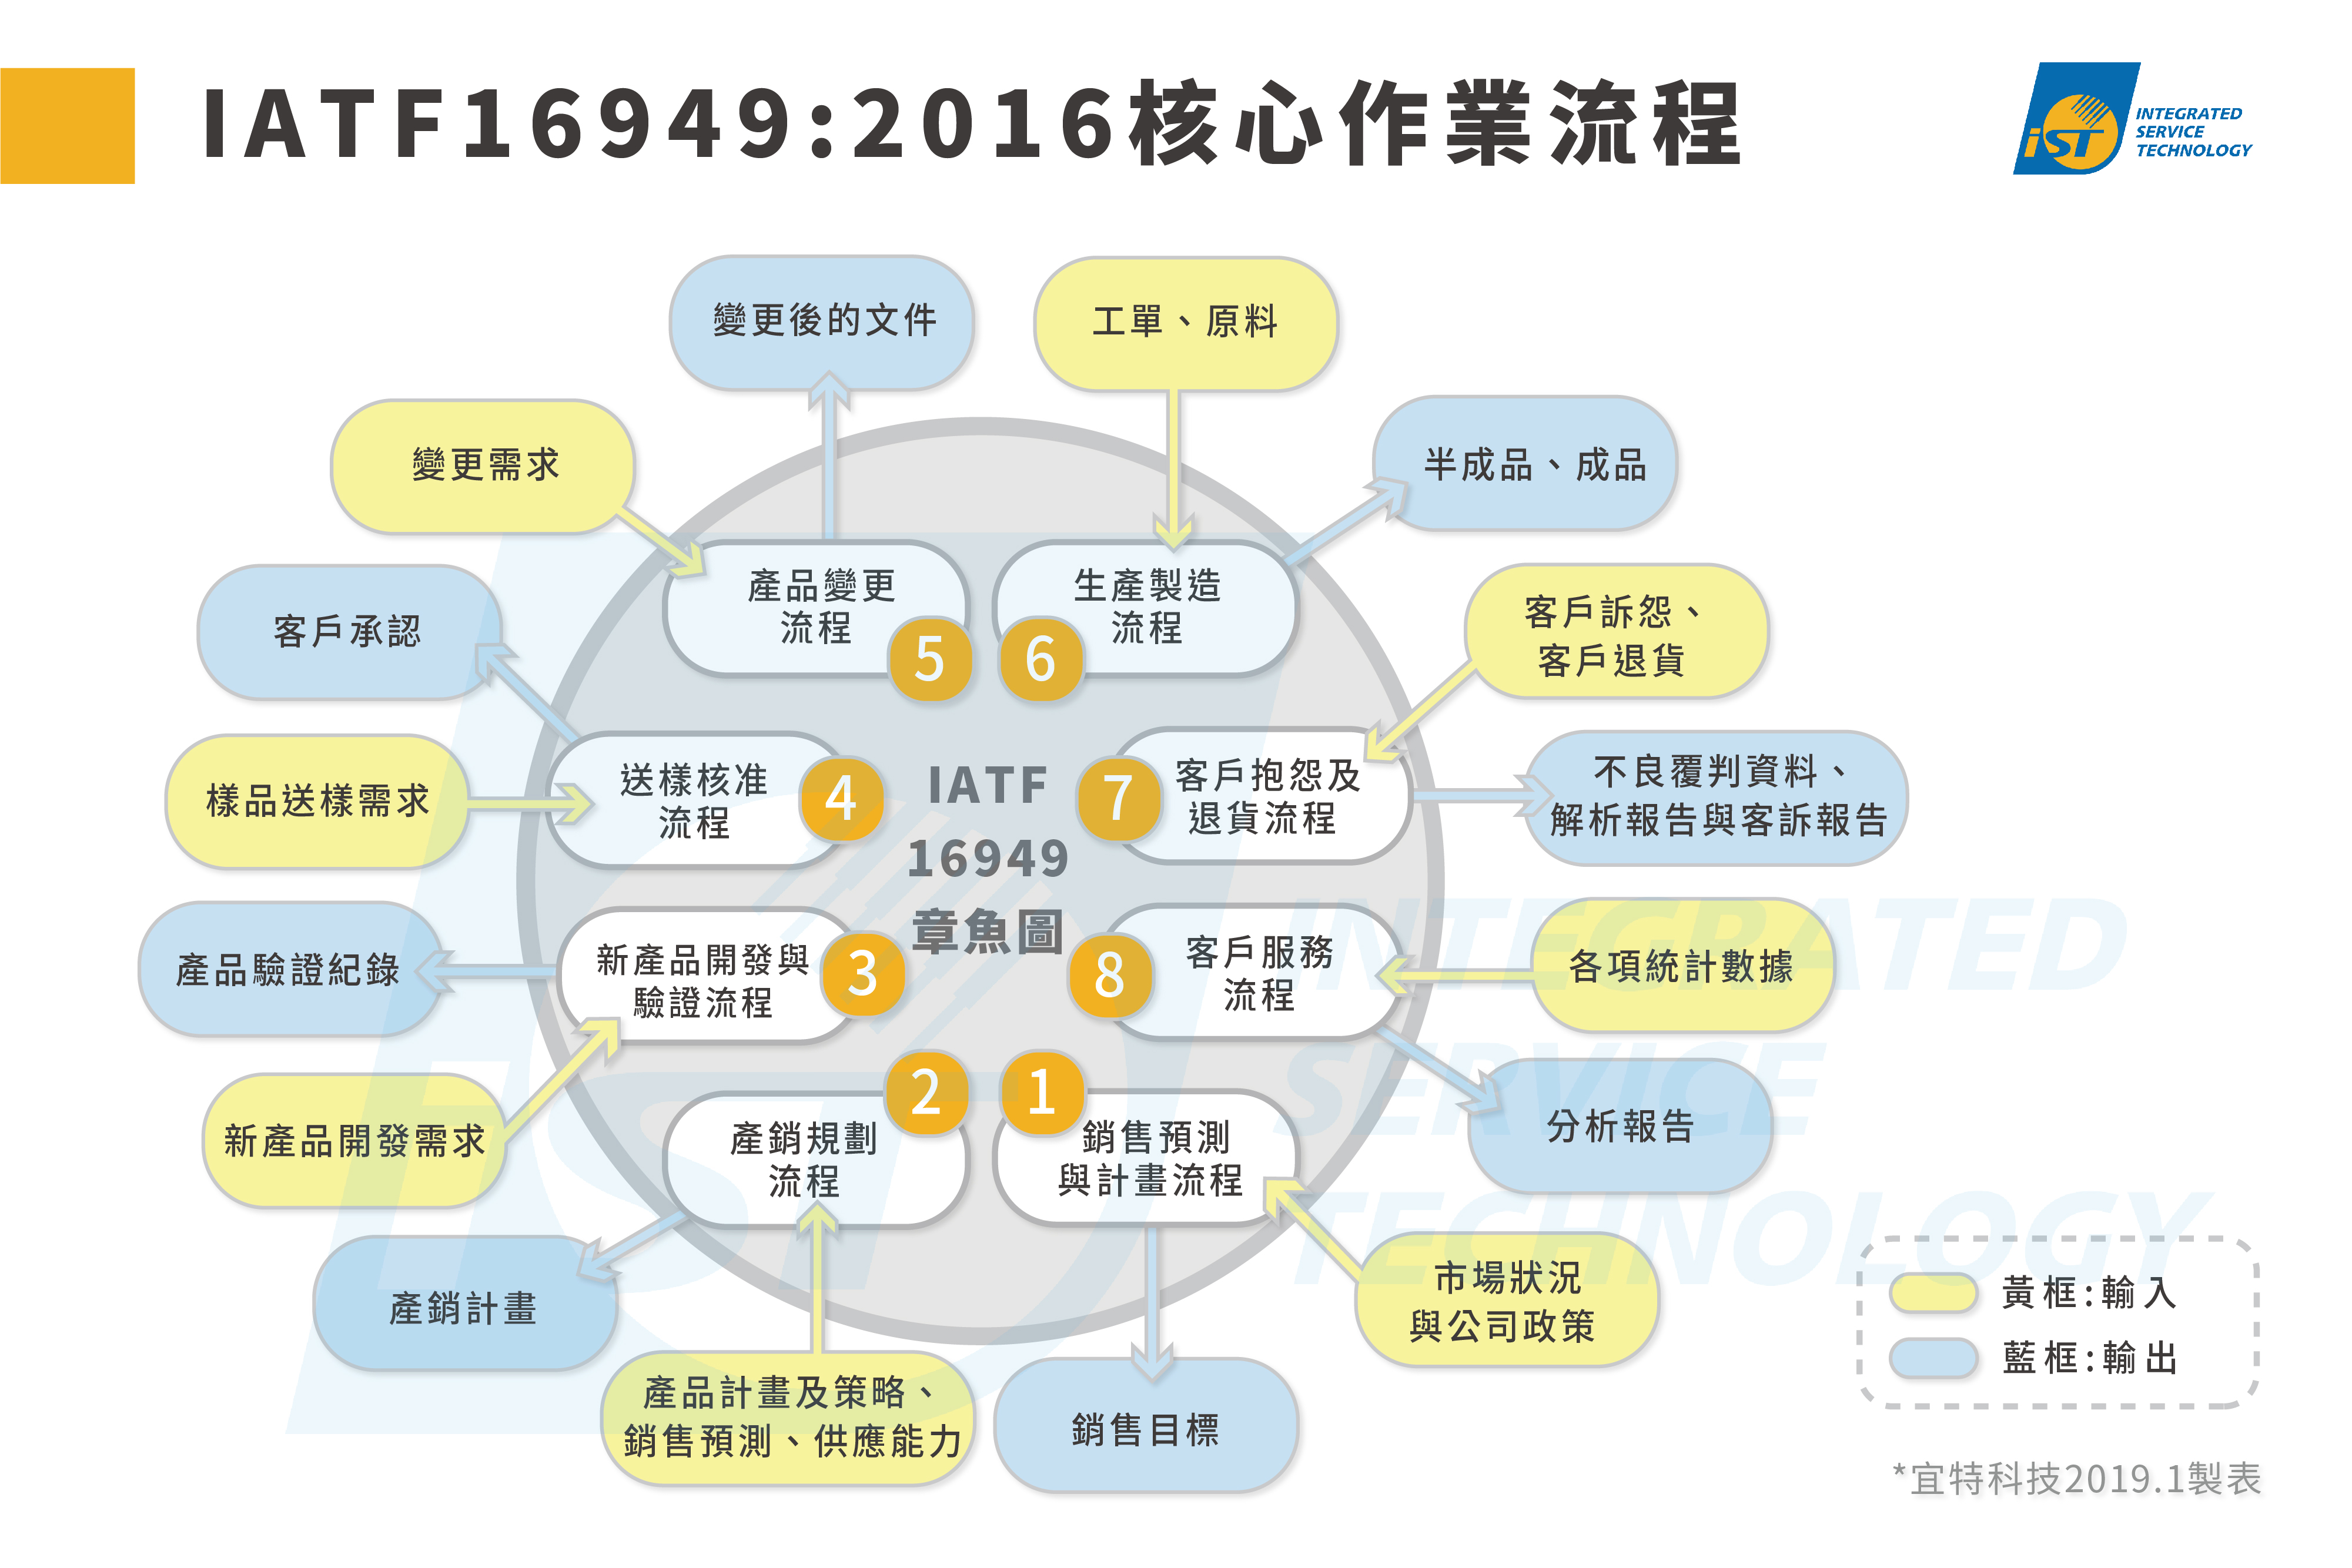 IATF 16949:2016核心作業流程